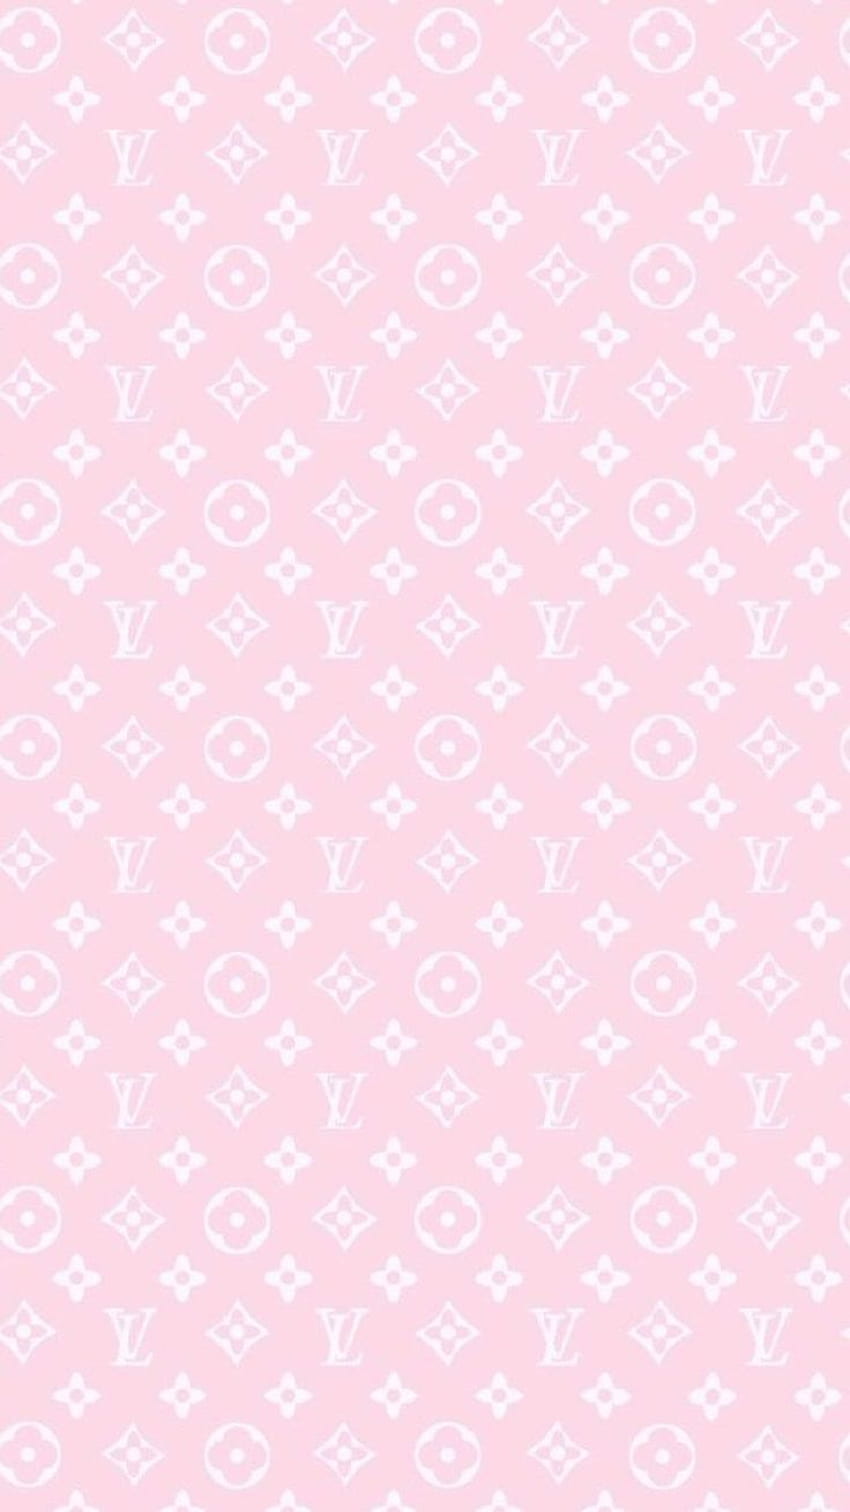 Louis Vuitton Aesthetic Background - 2021  Pink wallpaper iphone, Iphone  wallpaper vsco, Louis vuitton iphone wallpaper